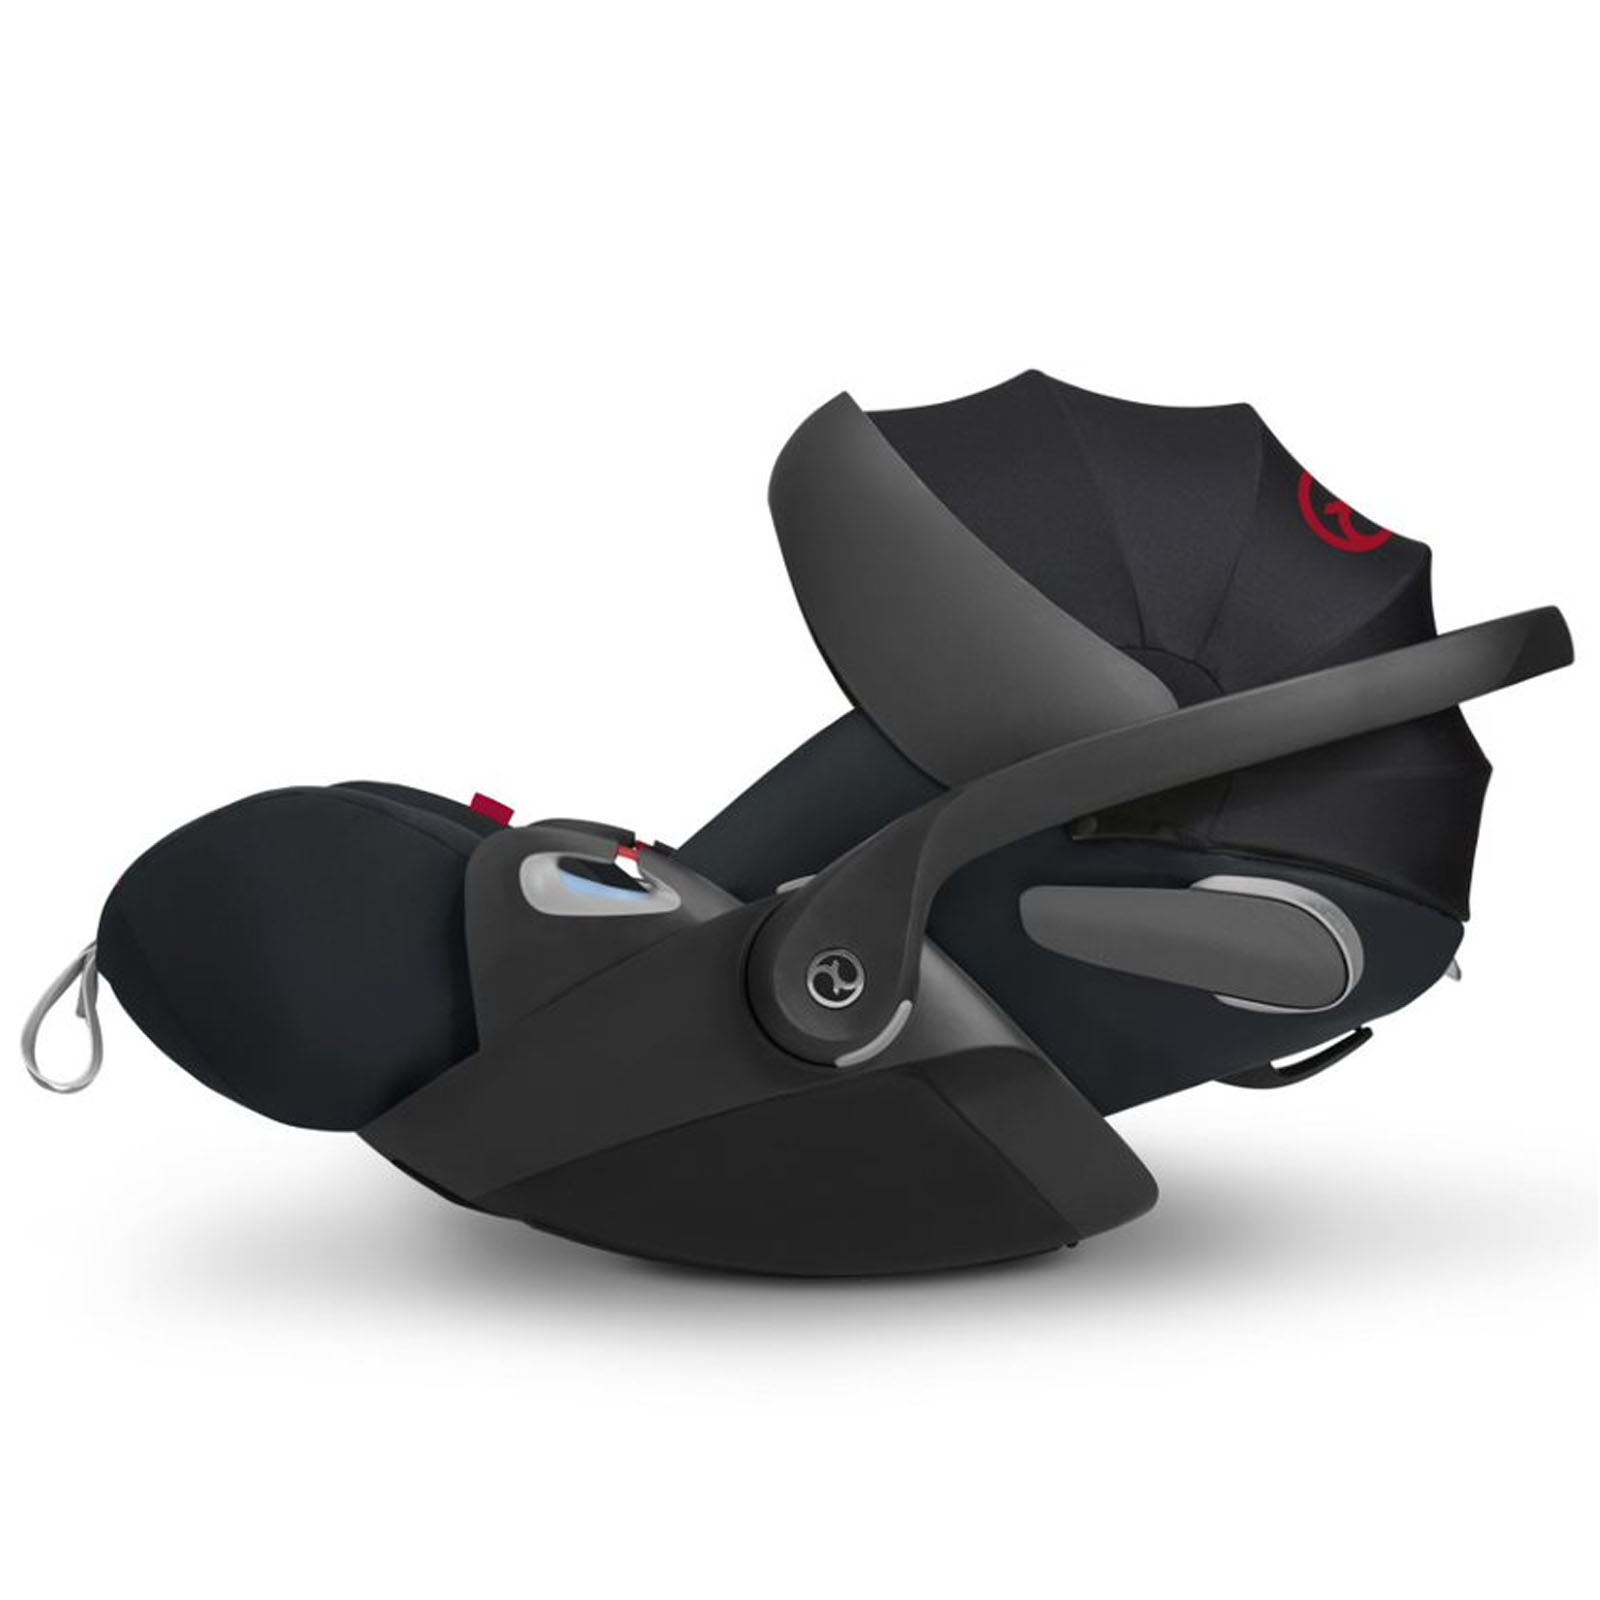 Cybex Cloud Z i-Size Lie-Flat Infant Car Seat - Scuderia Ferrari Fashion Edition Black